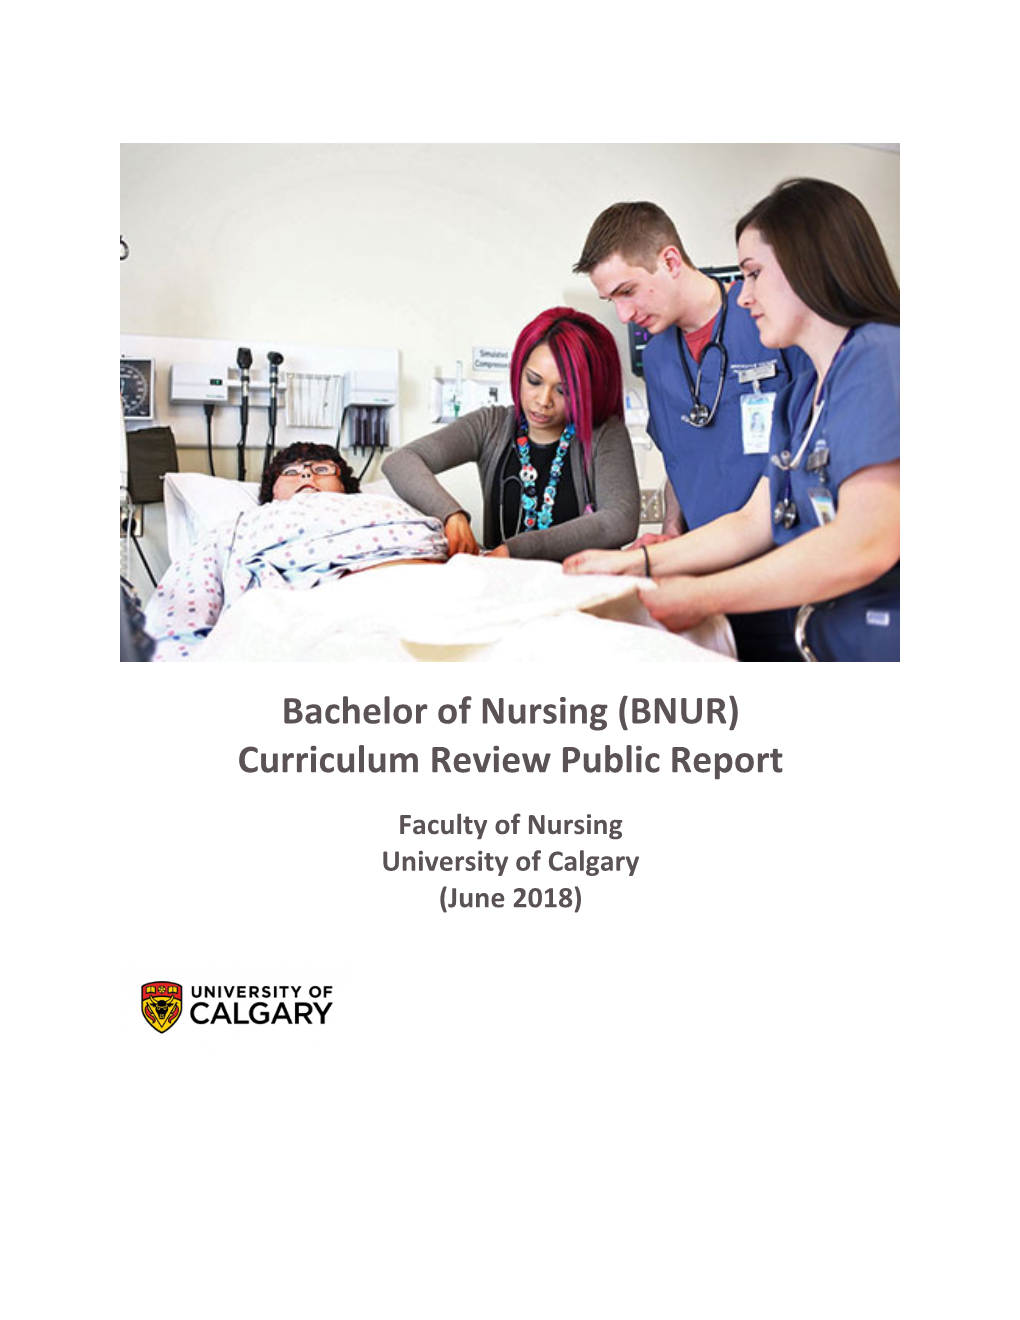 Bachelor of Nursing (BNUR) Curriculum Review Public Report